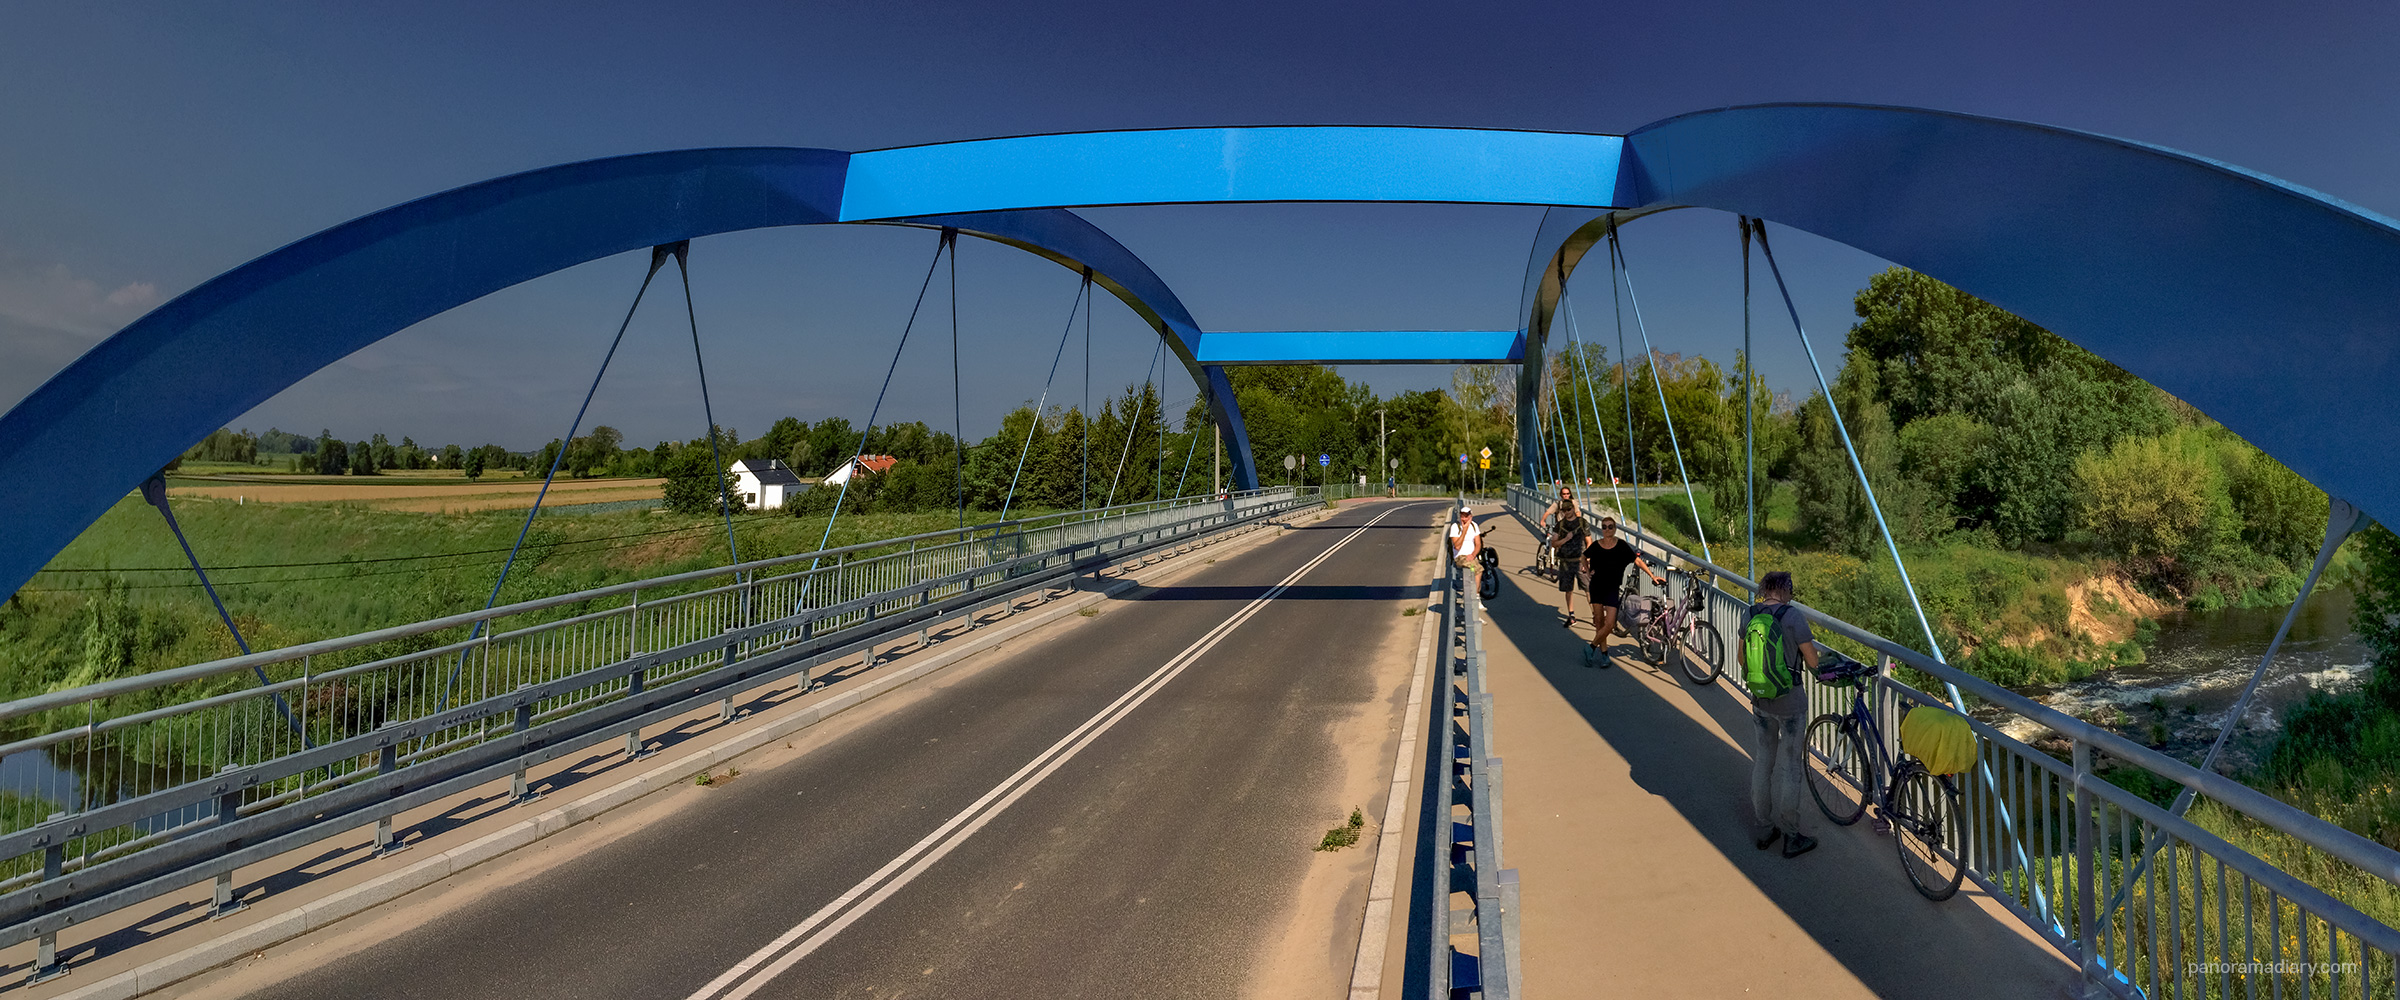 Cyclists on the bridge | PANORAMA DIARY